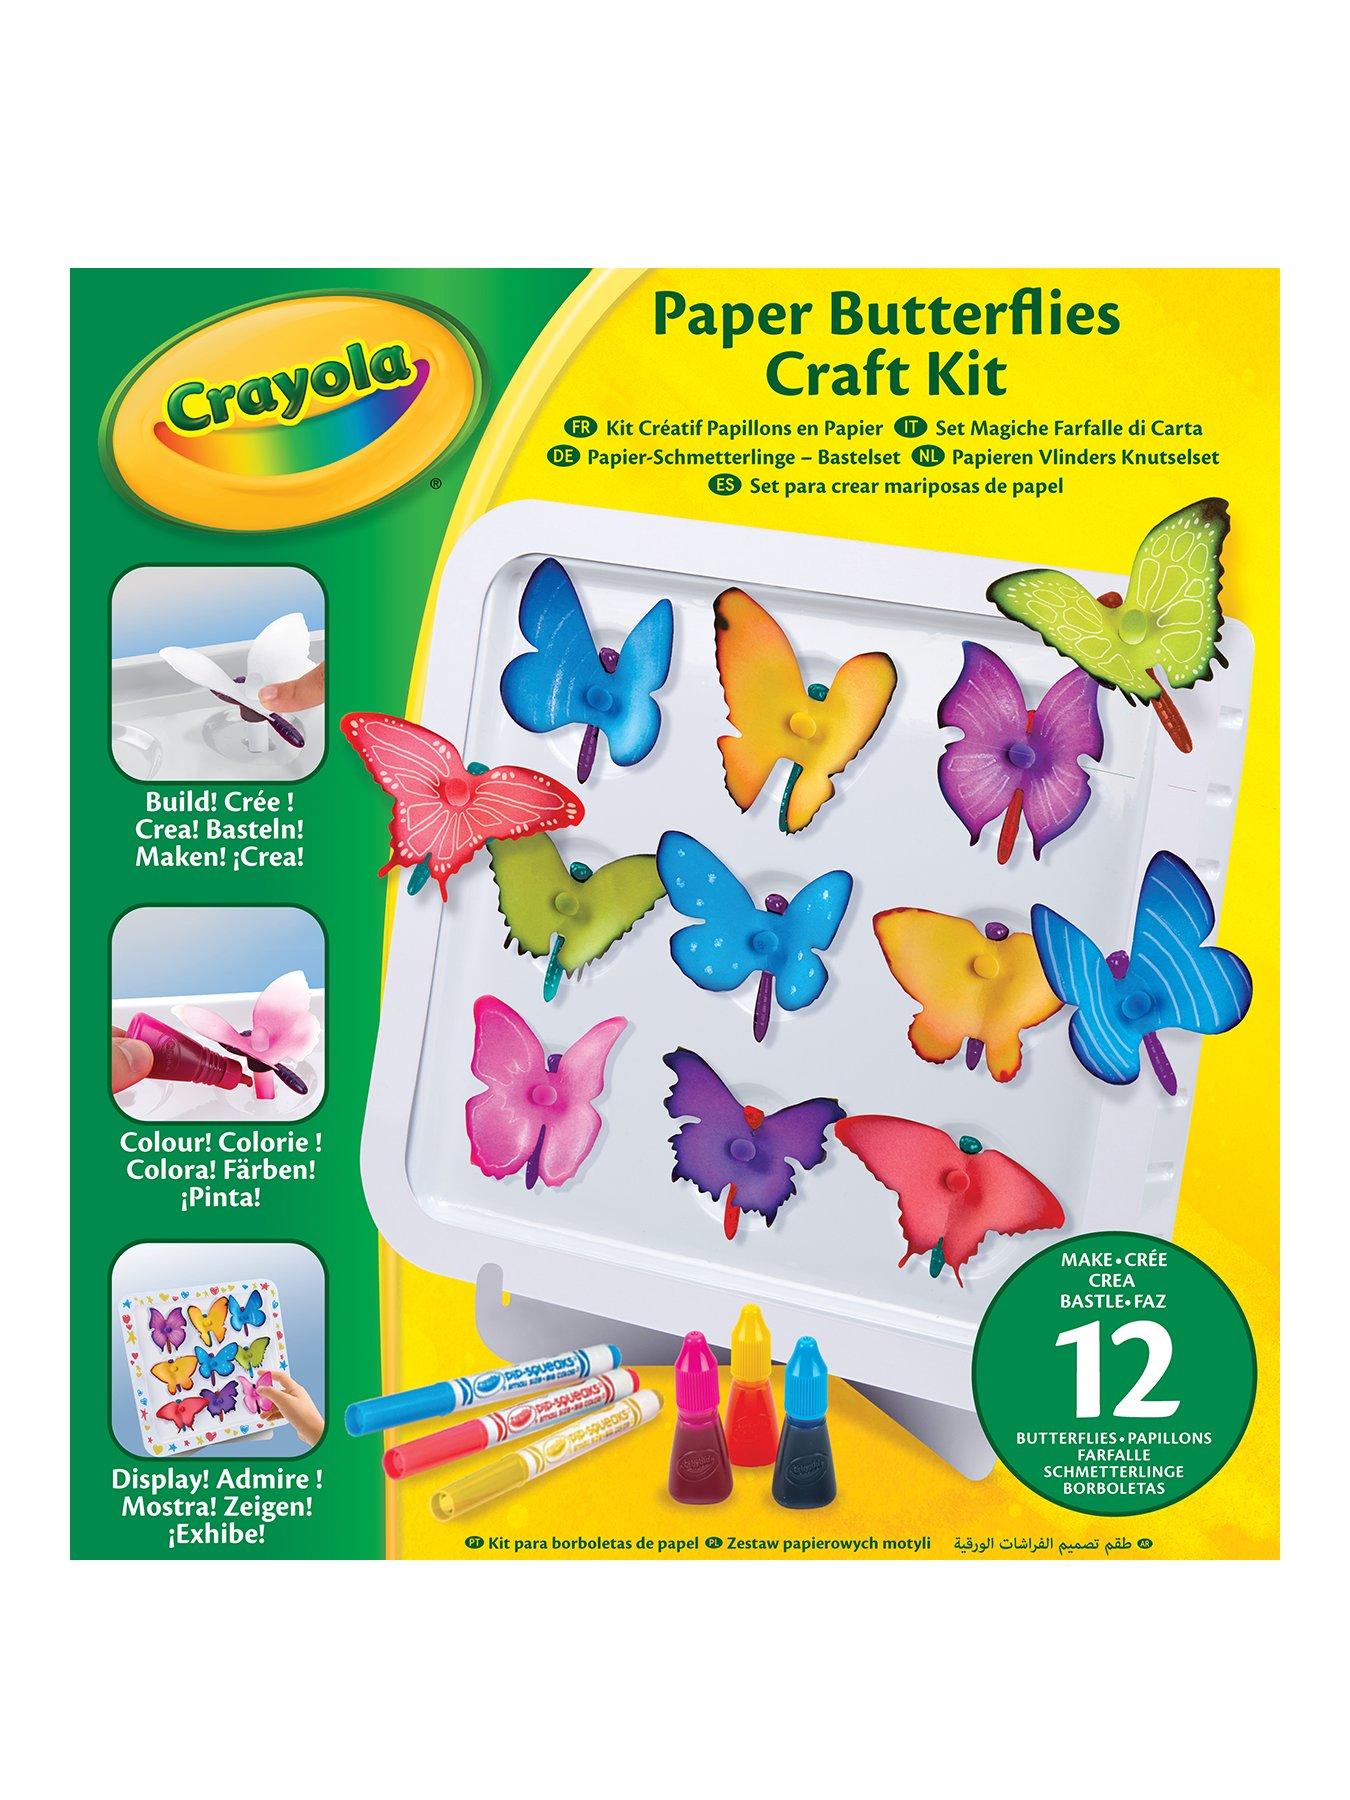 Crayola Paper Butterflies STEAM Science Kit